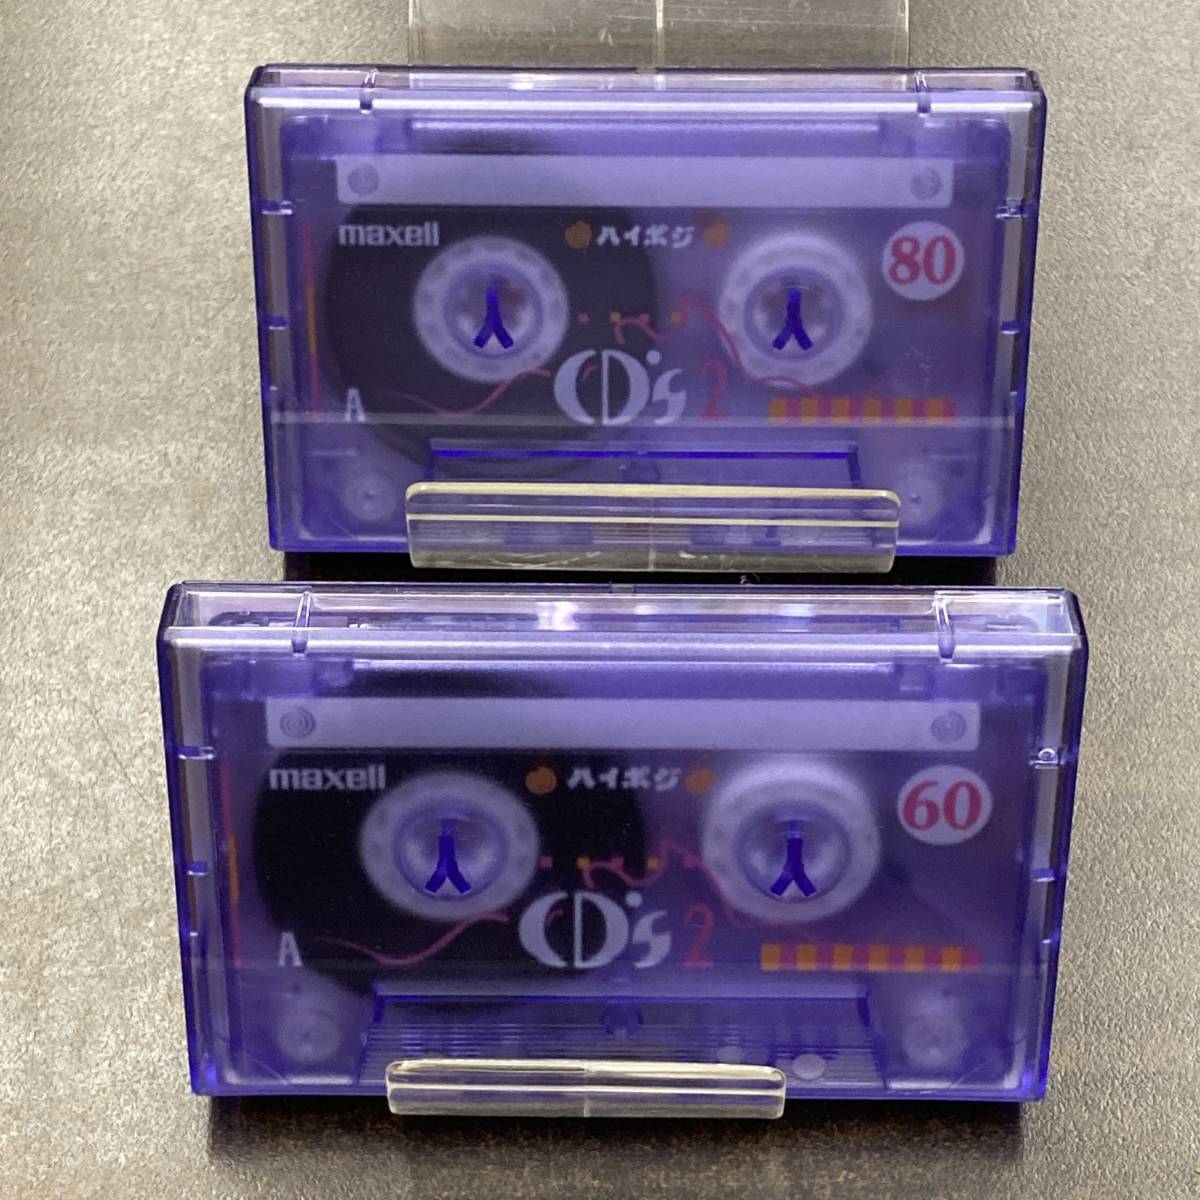 1119BT マクセル CD's2 60 80分 ハイポジ 2本 カセットテープ/Two Maxell CD's2 60 80 Type II High Position Audio Cassette_画像5